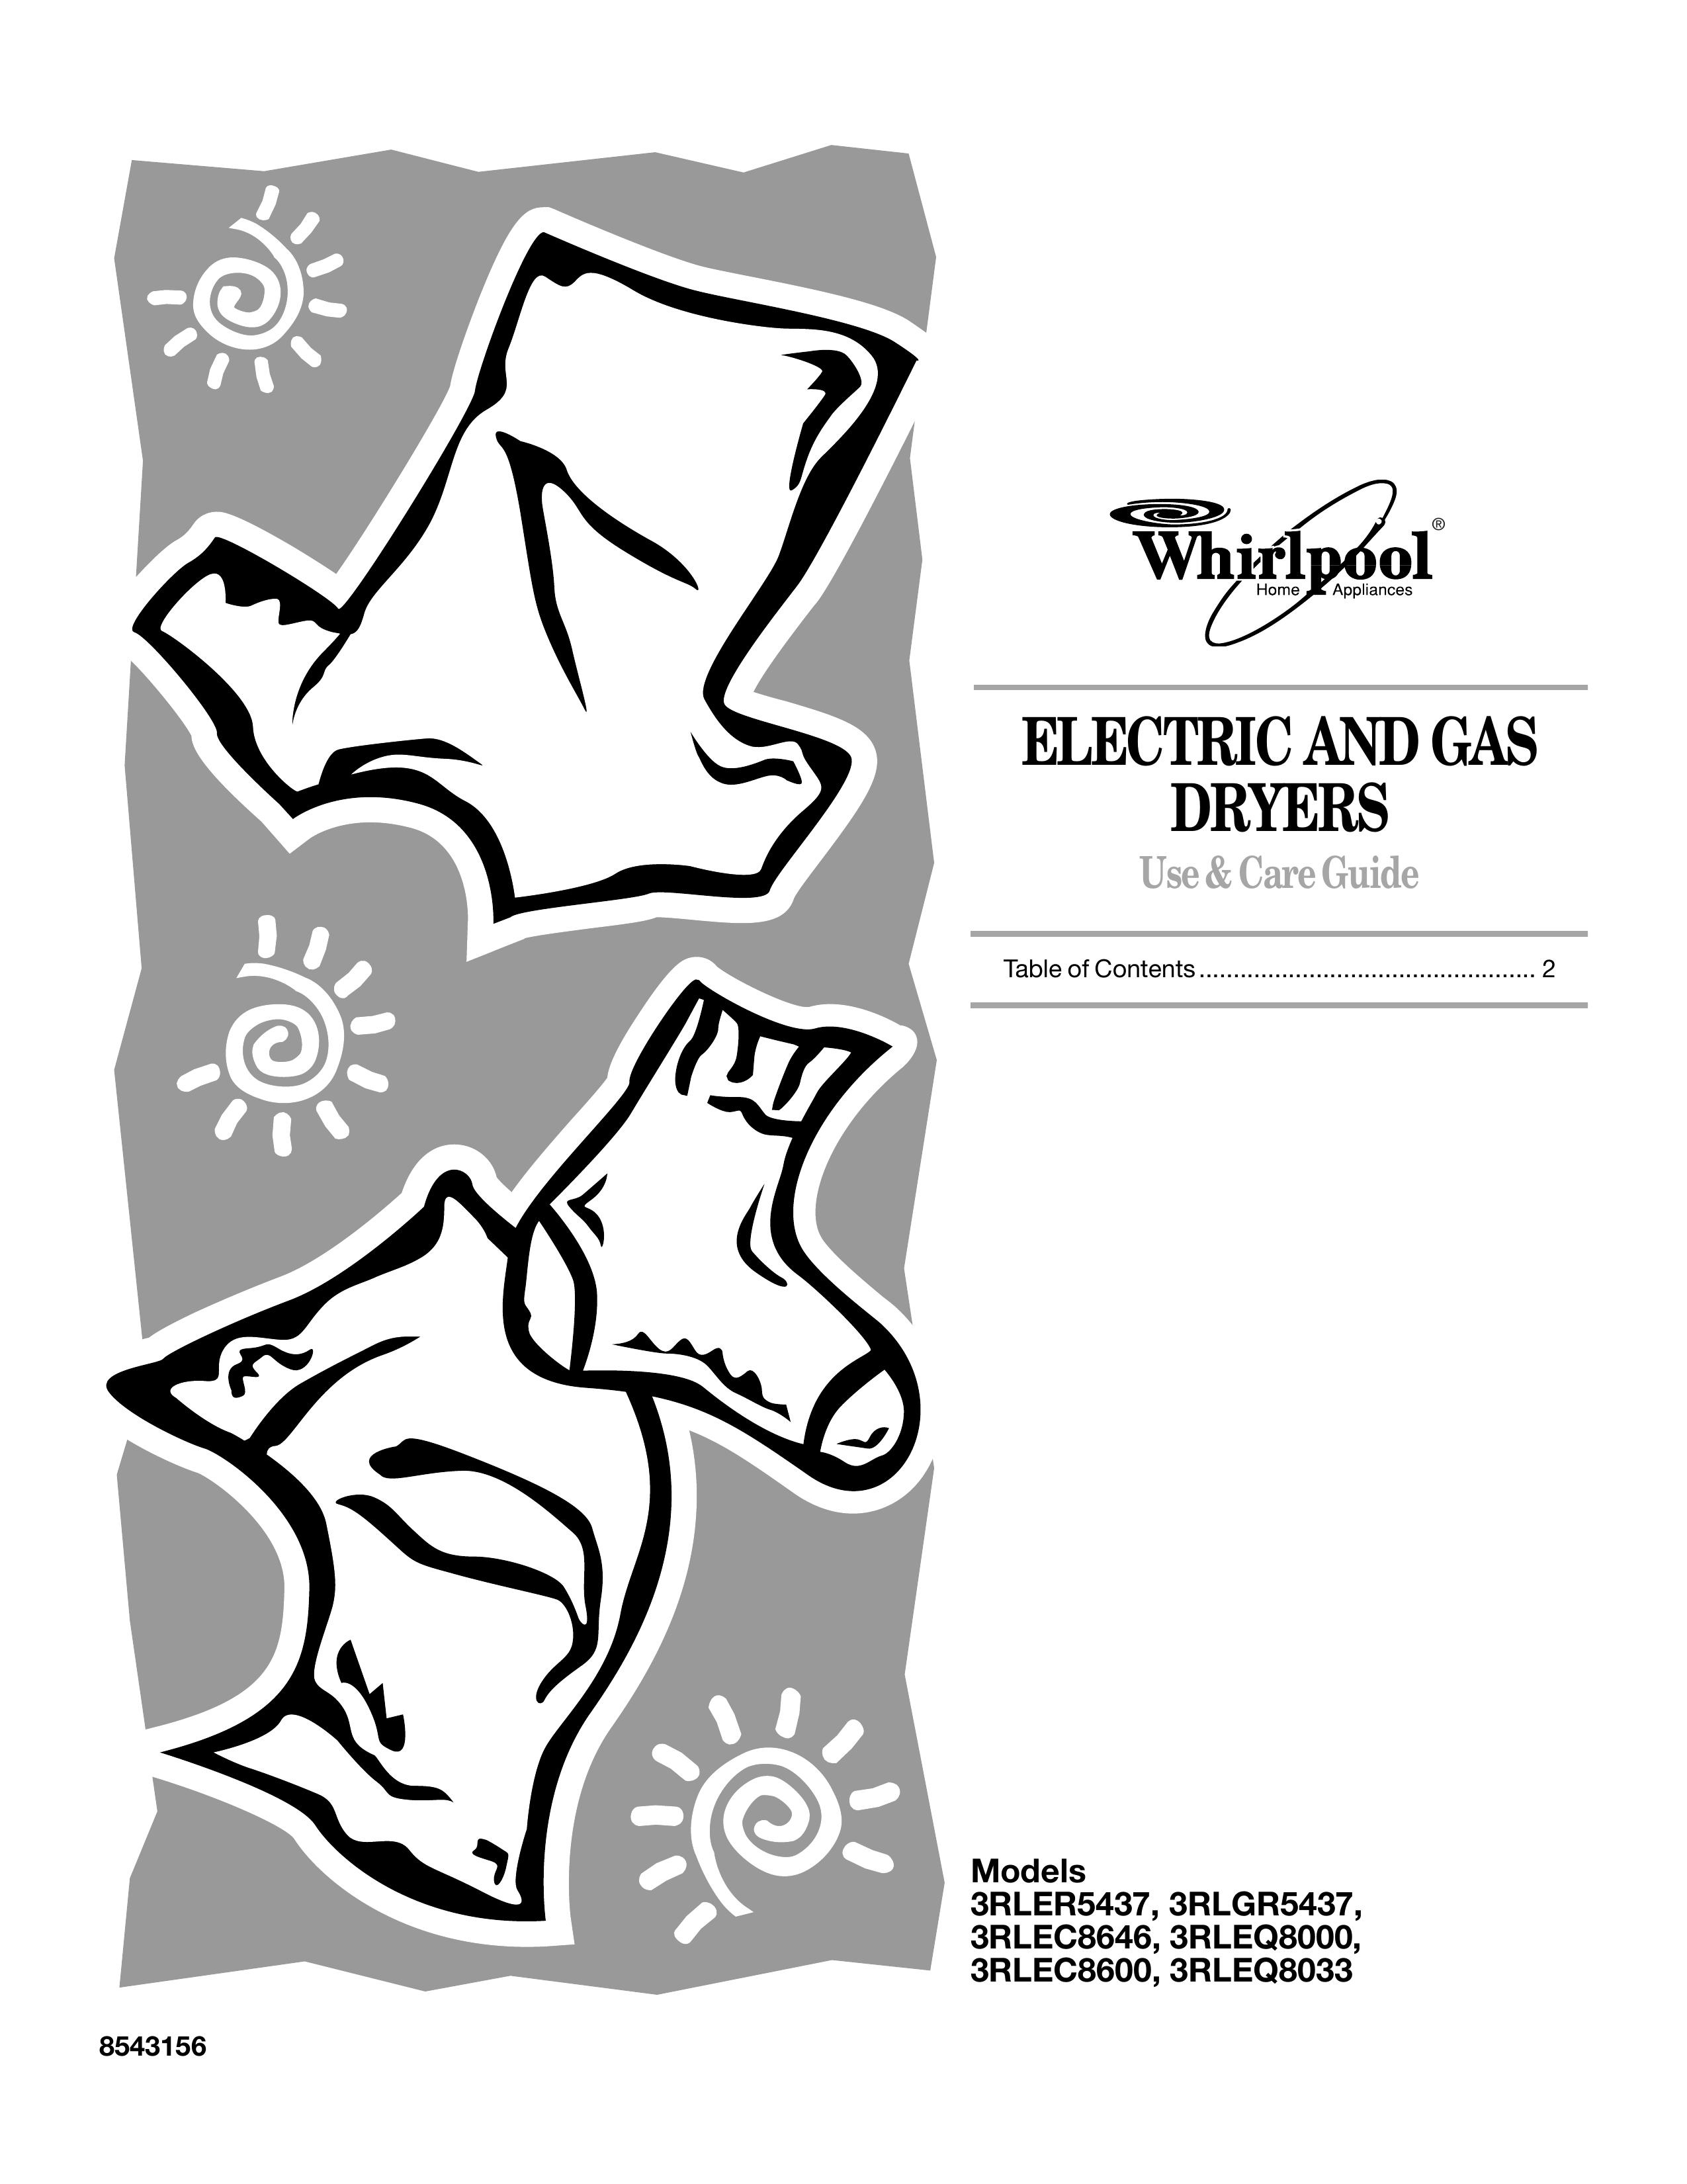 Whirlpool 3RLGR5437 Clothes Dryer User Manual